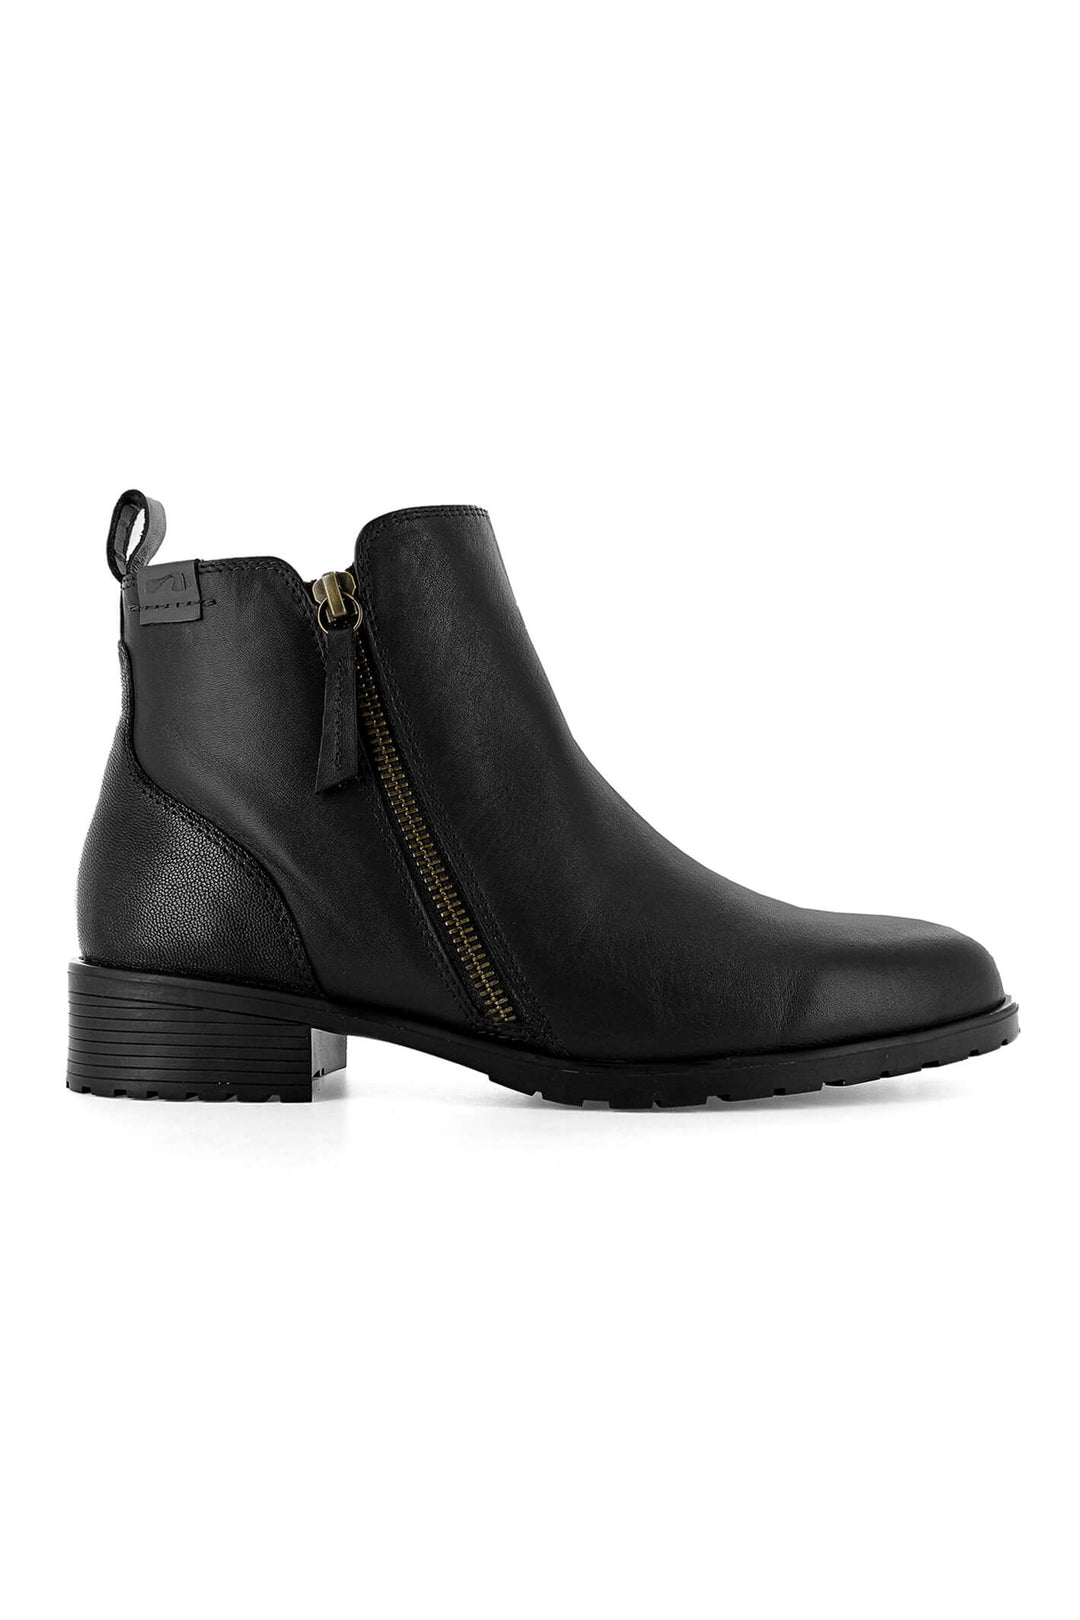 Strive Sandringham Black Zip Leather Boots - Shirley Allum Boutique